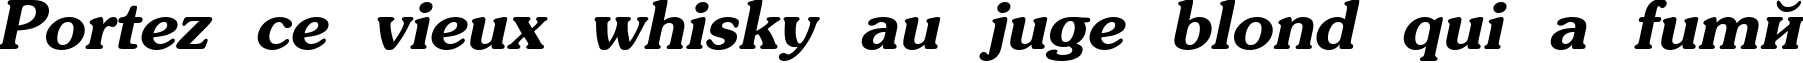 Пример написания шрифтом AG_Souvenir Bold Italic текста на французском